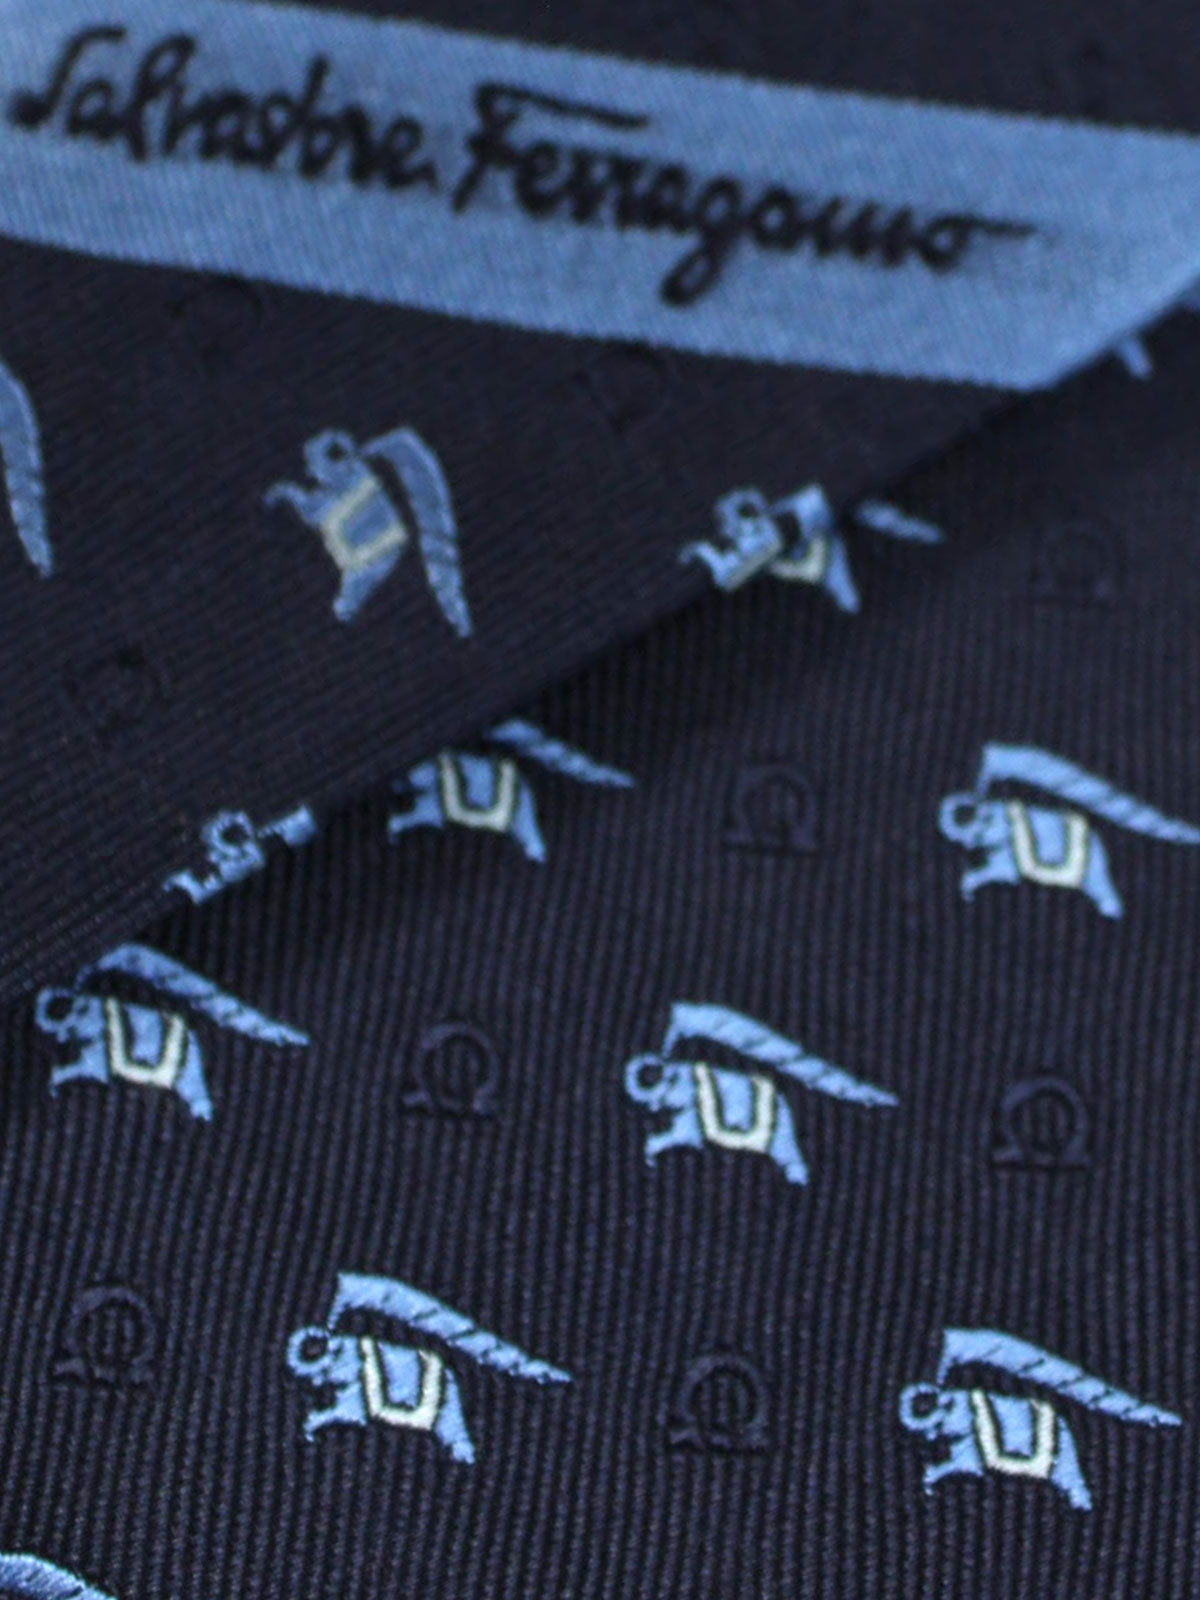 Salvatore Ferragamo Silk Narrow Tie Navy Blue Elephant Novelty